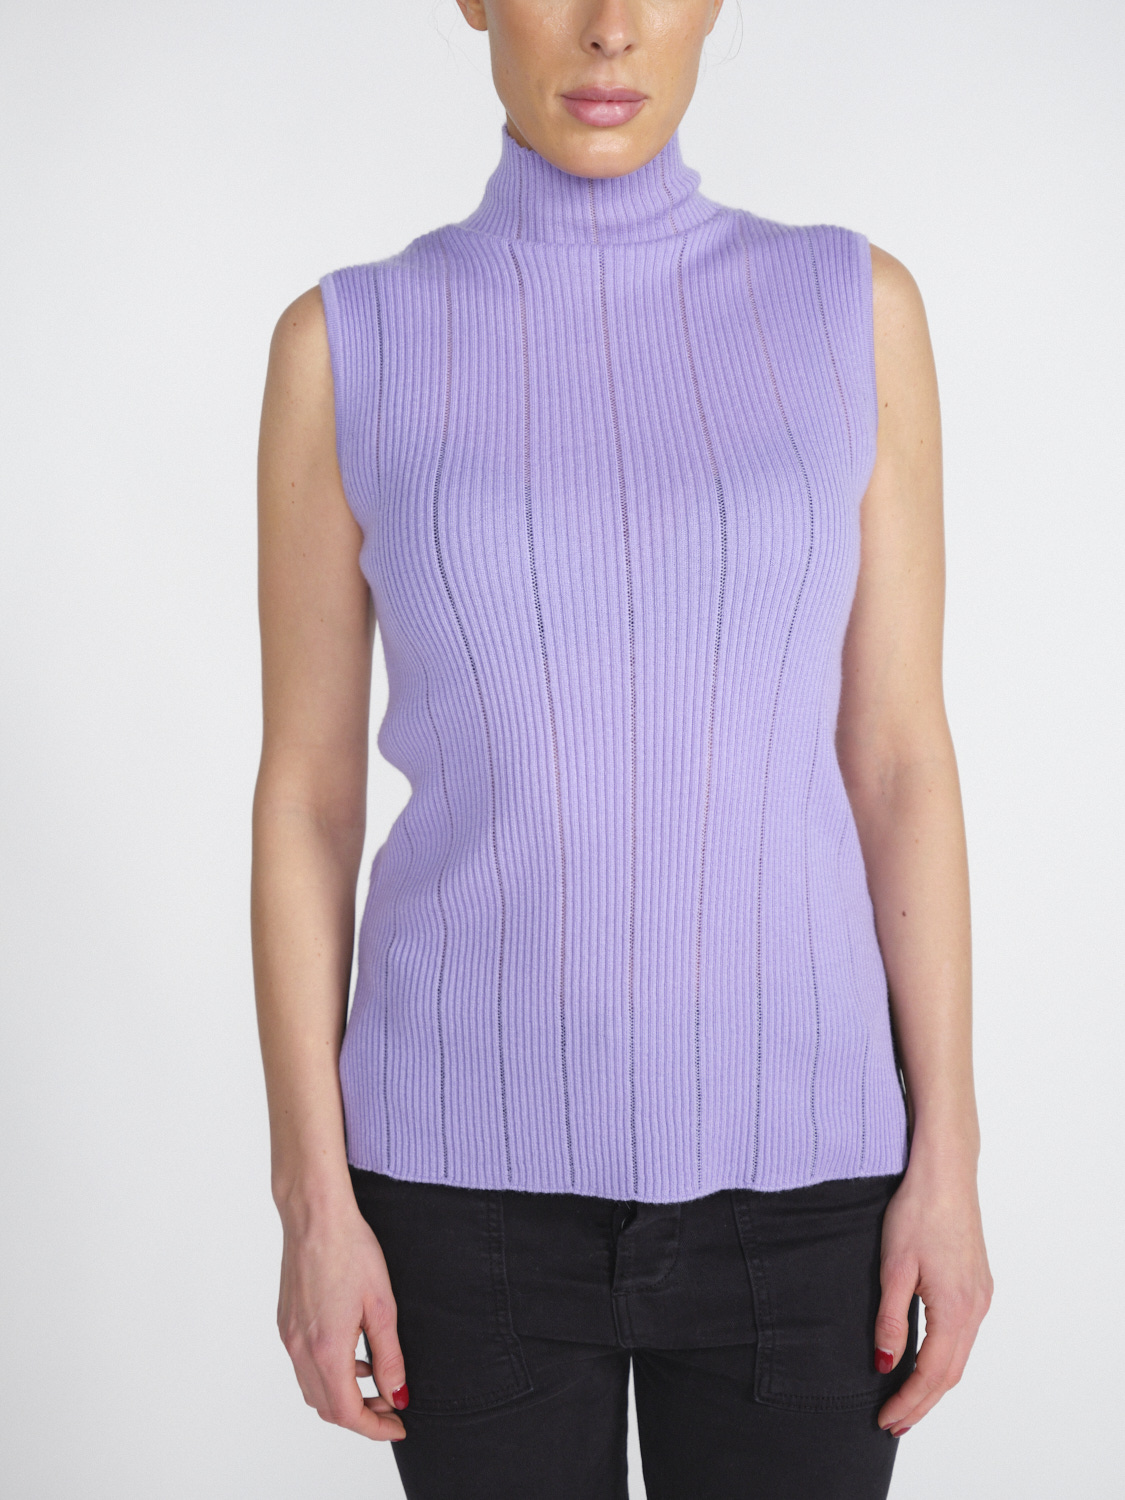 Iris von Arnim Loulou - Knitted top in cashmere-silk blend  lila S